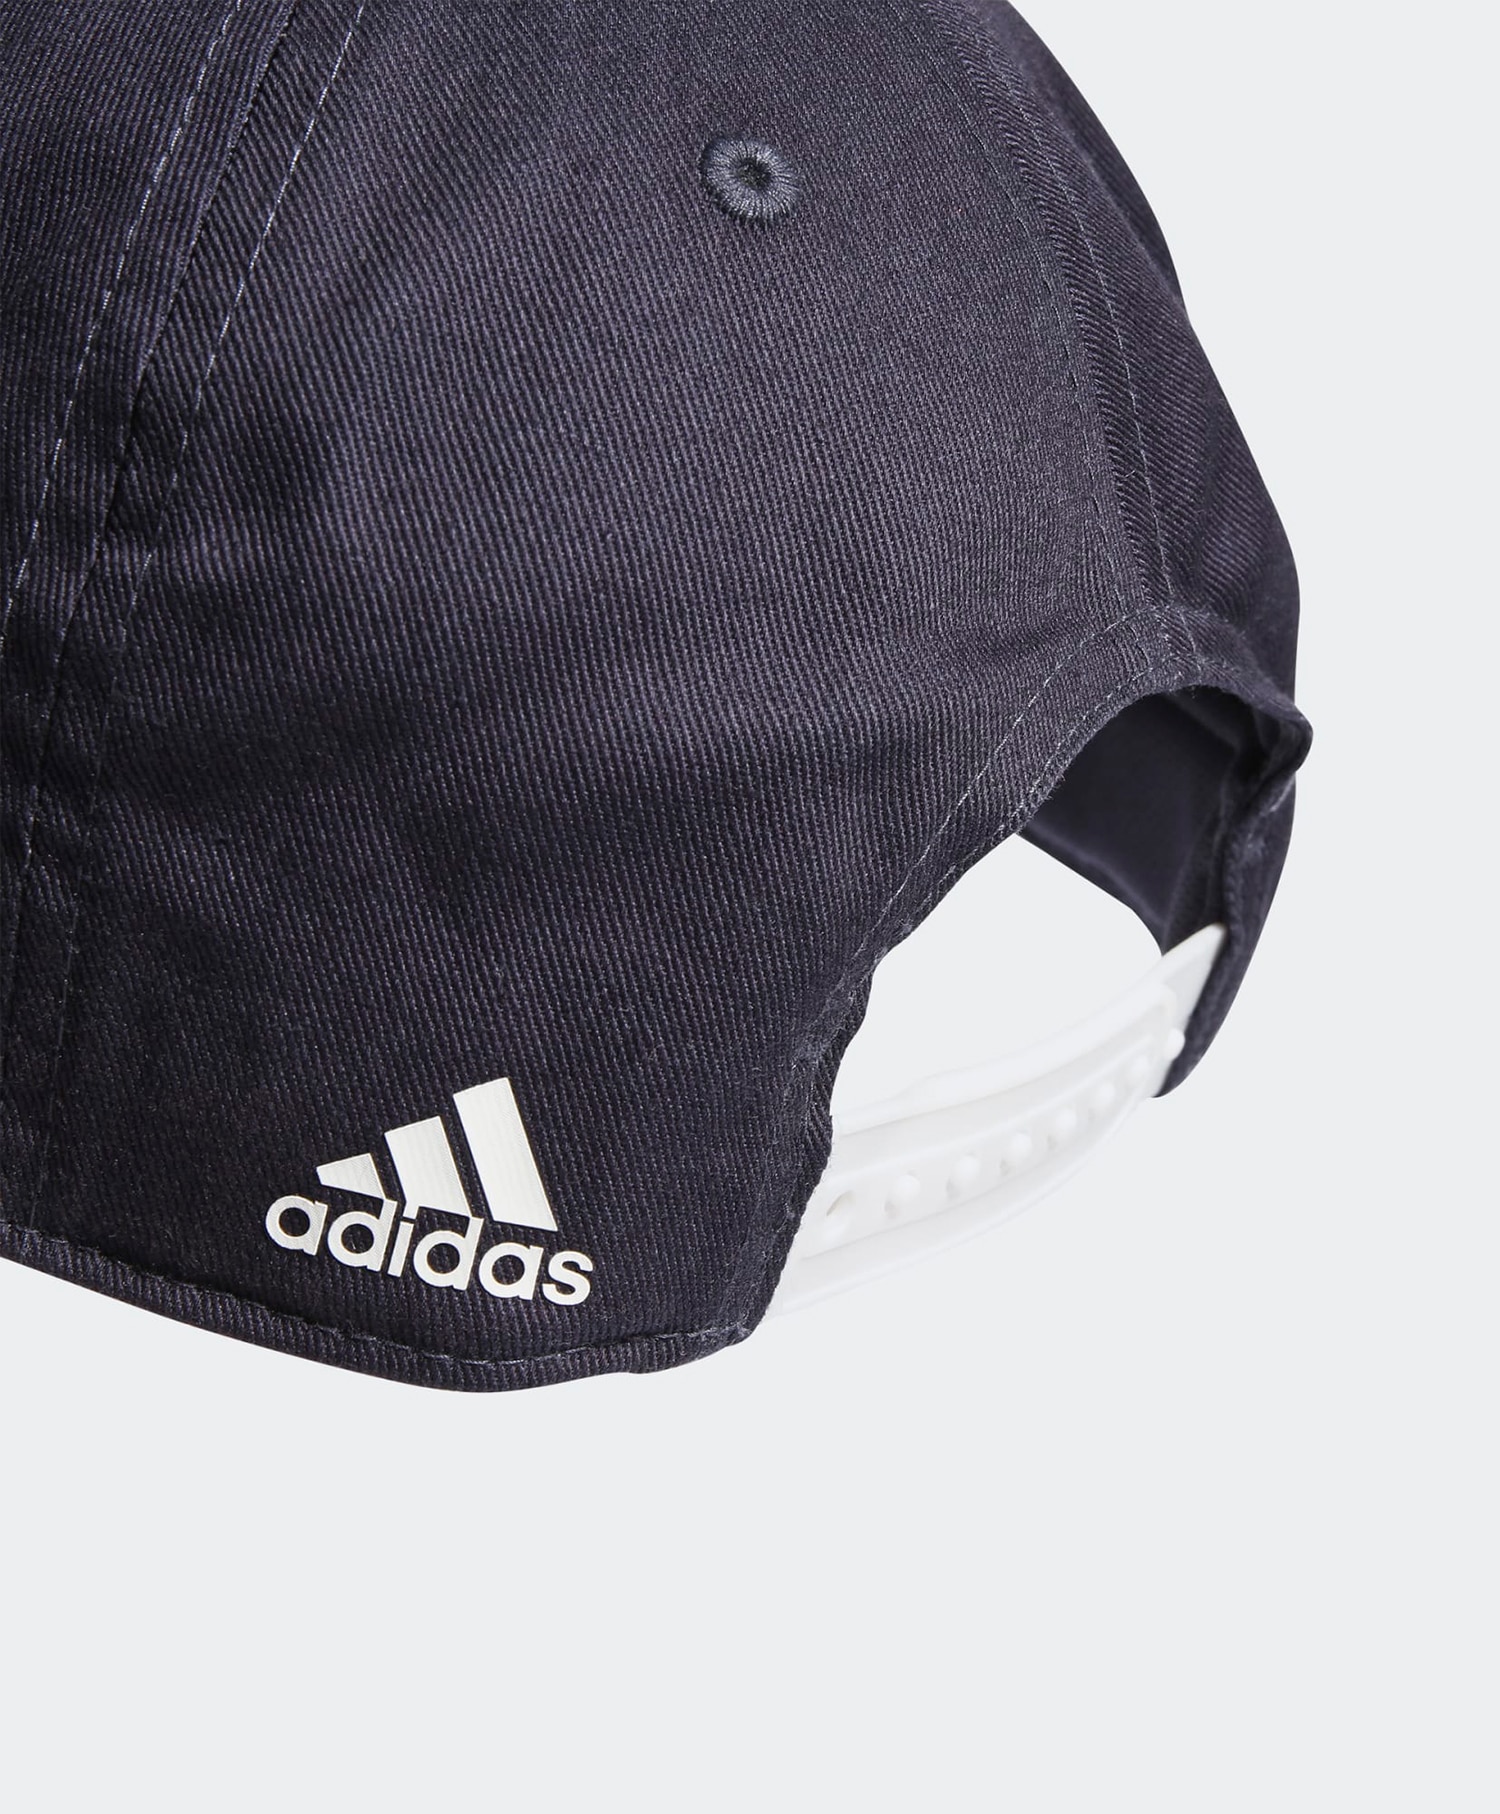 Adidas Daily Caps